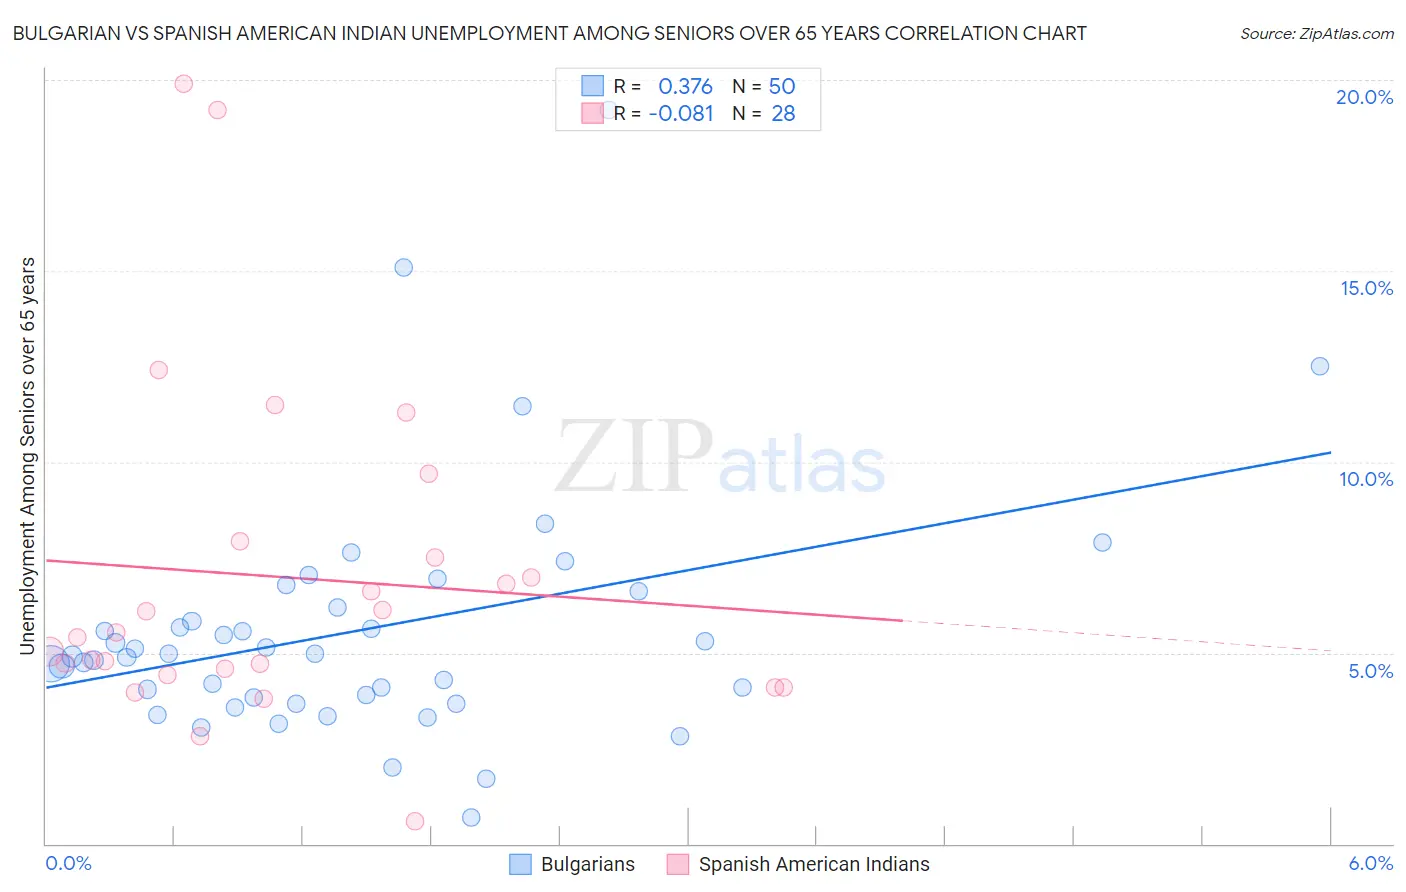 Bulgarian vs Spanish American Indian Unemployment Among Seniors over 65 years